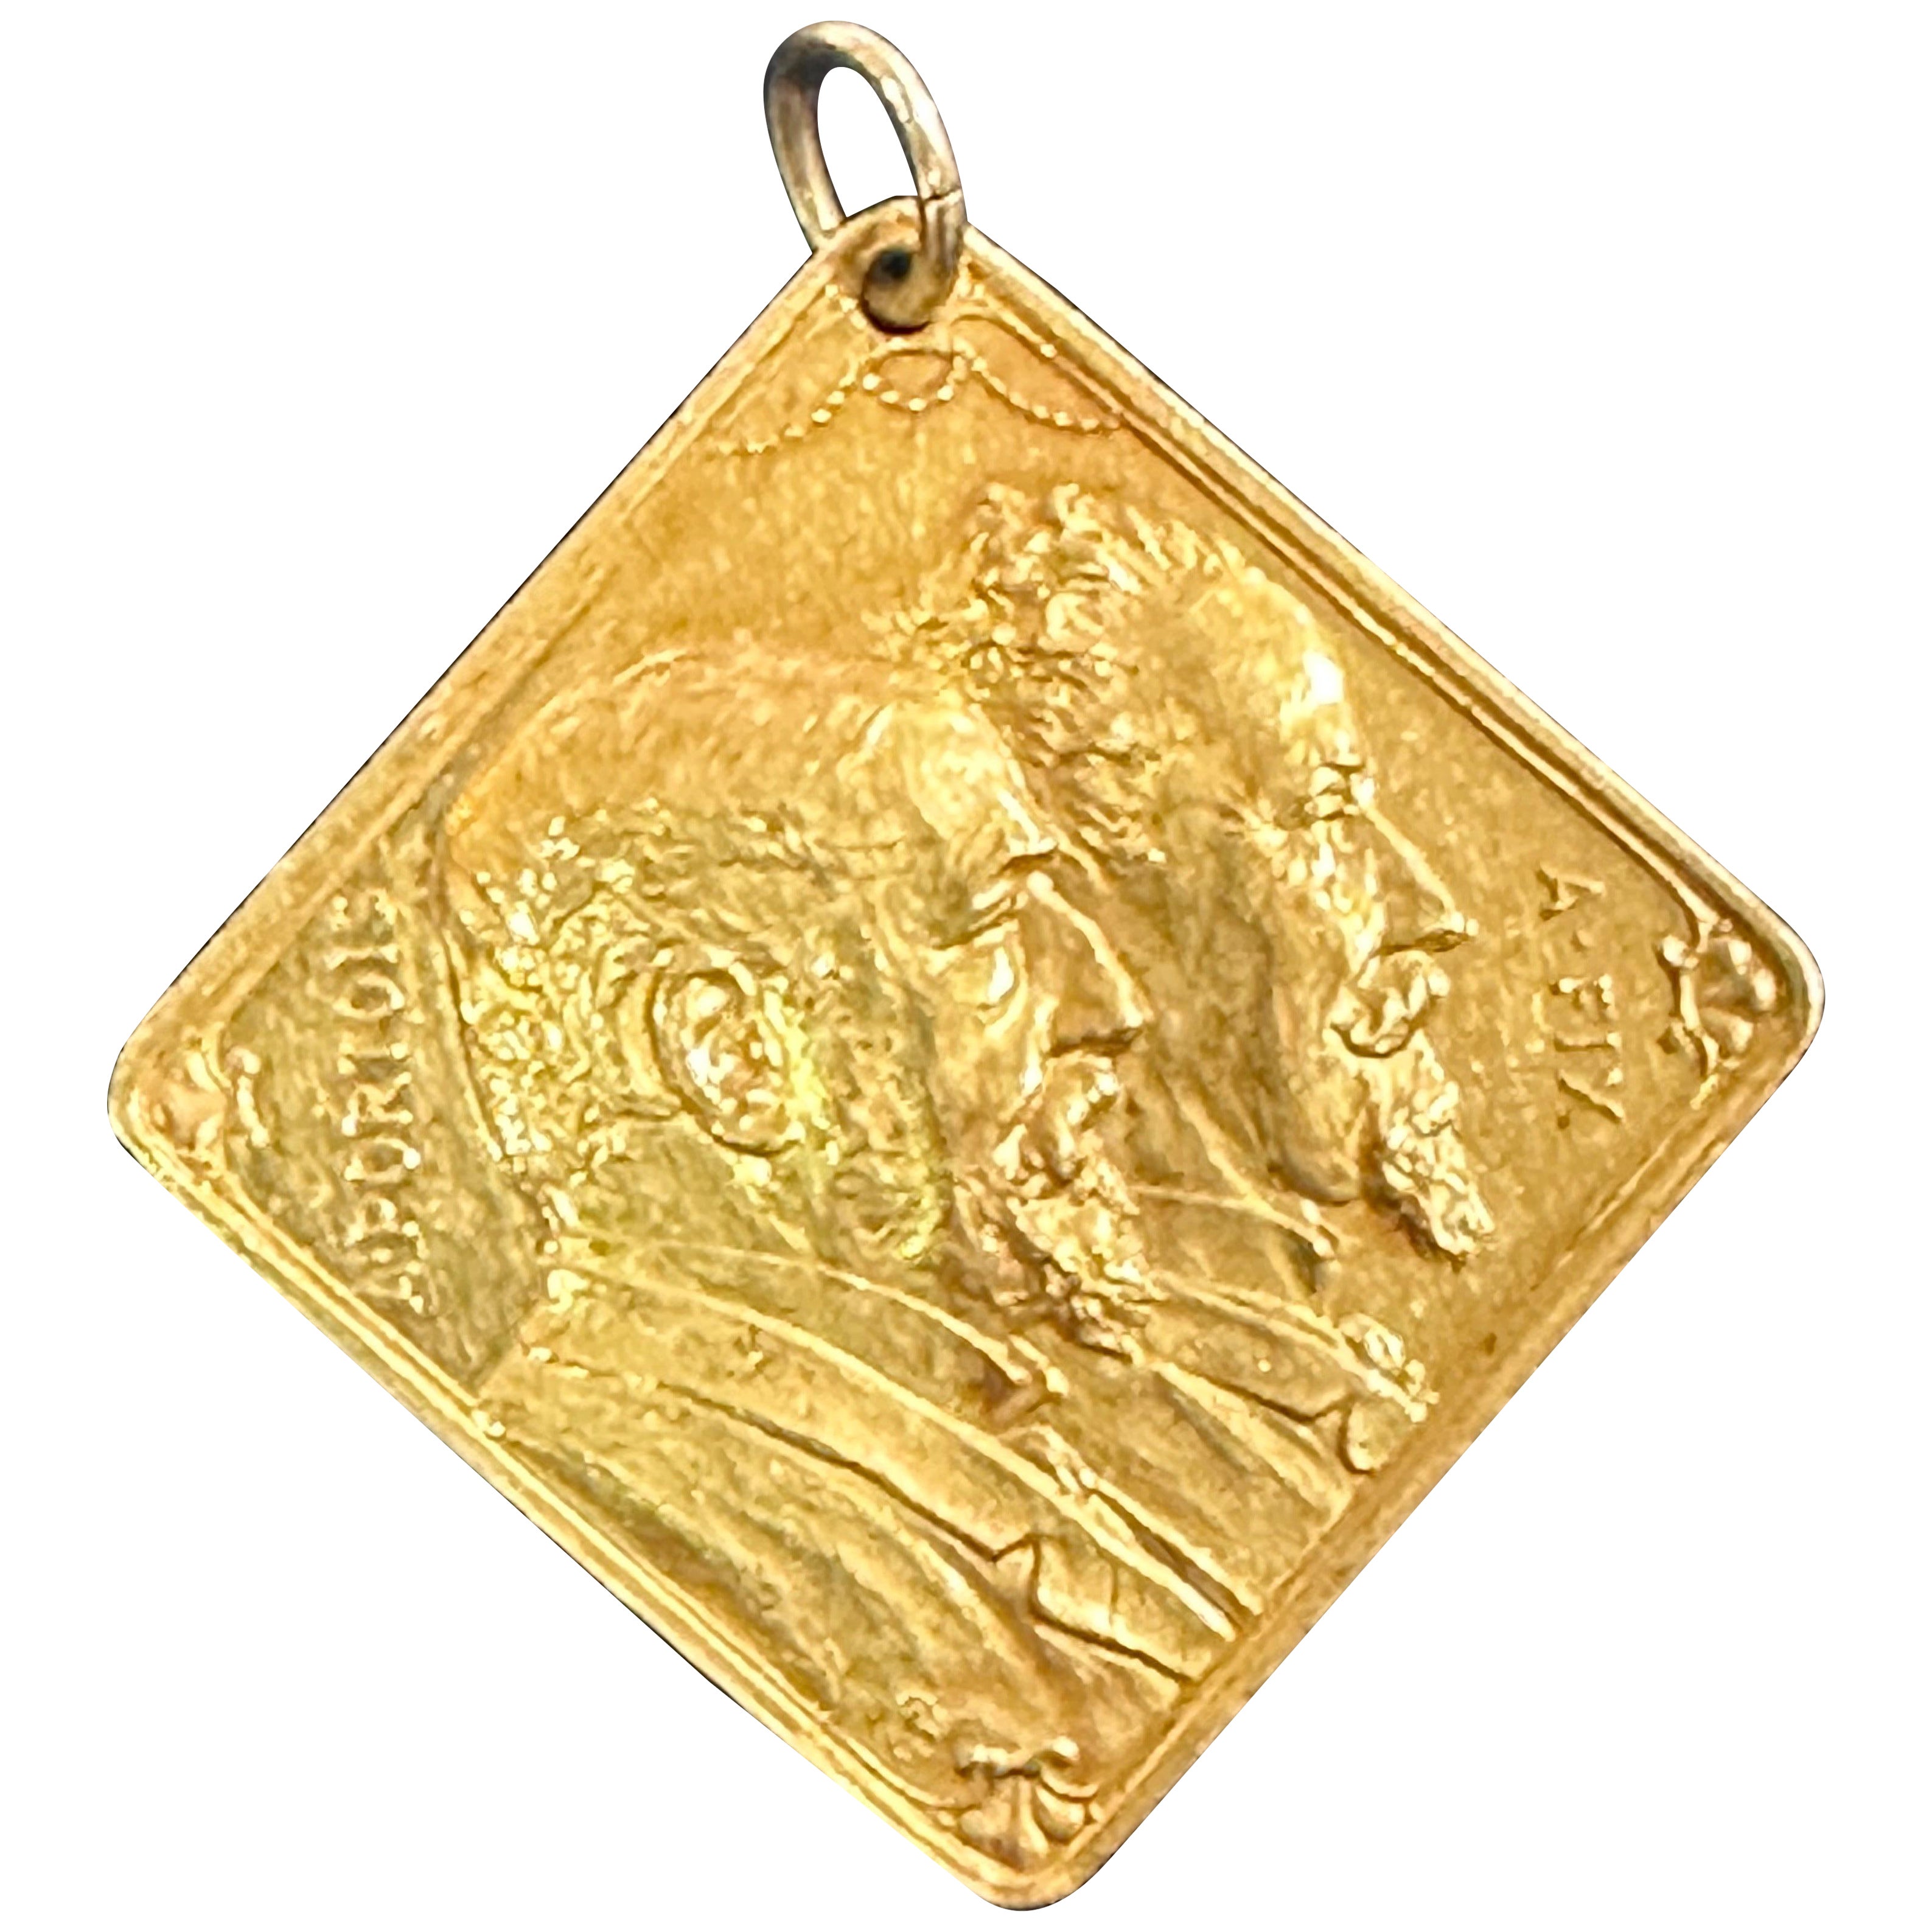 Honorary French Medal in 18-karätigem Gelbgold im Portois-Haus im Angebot